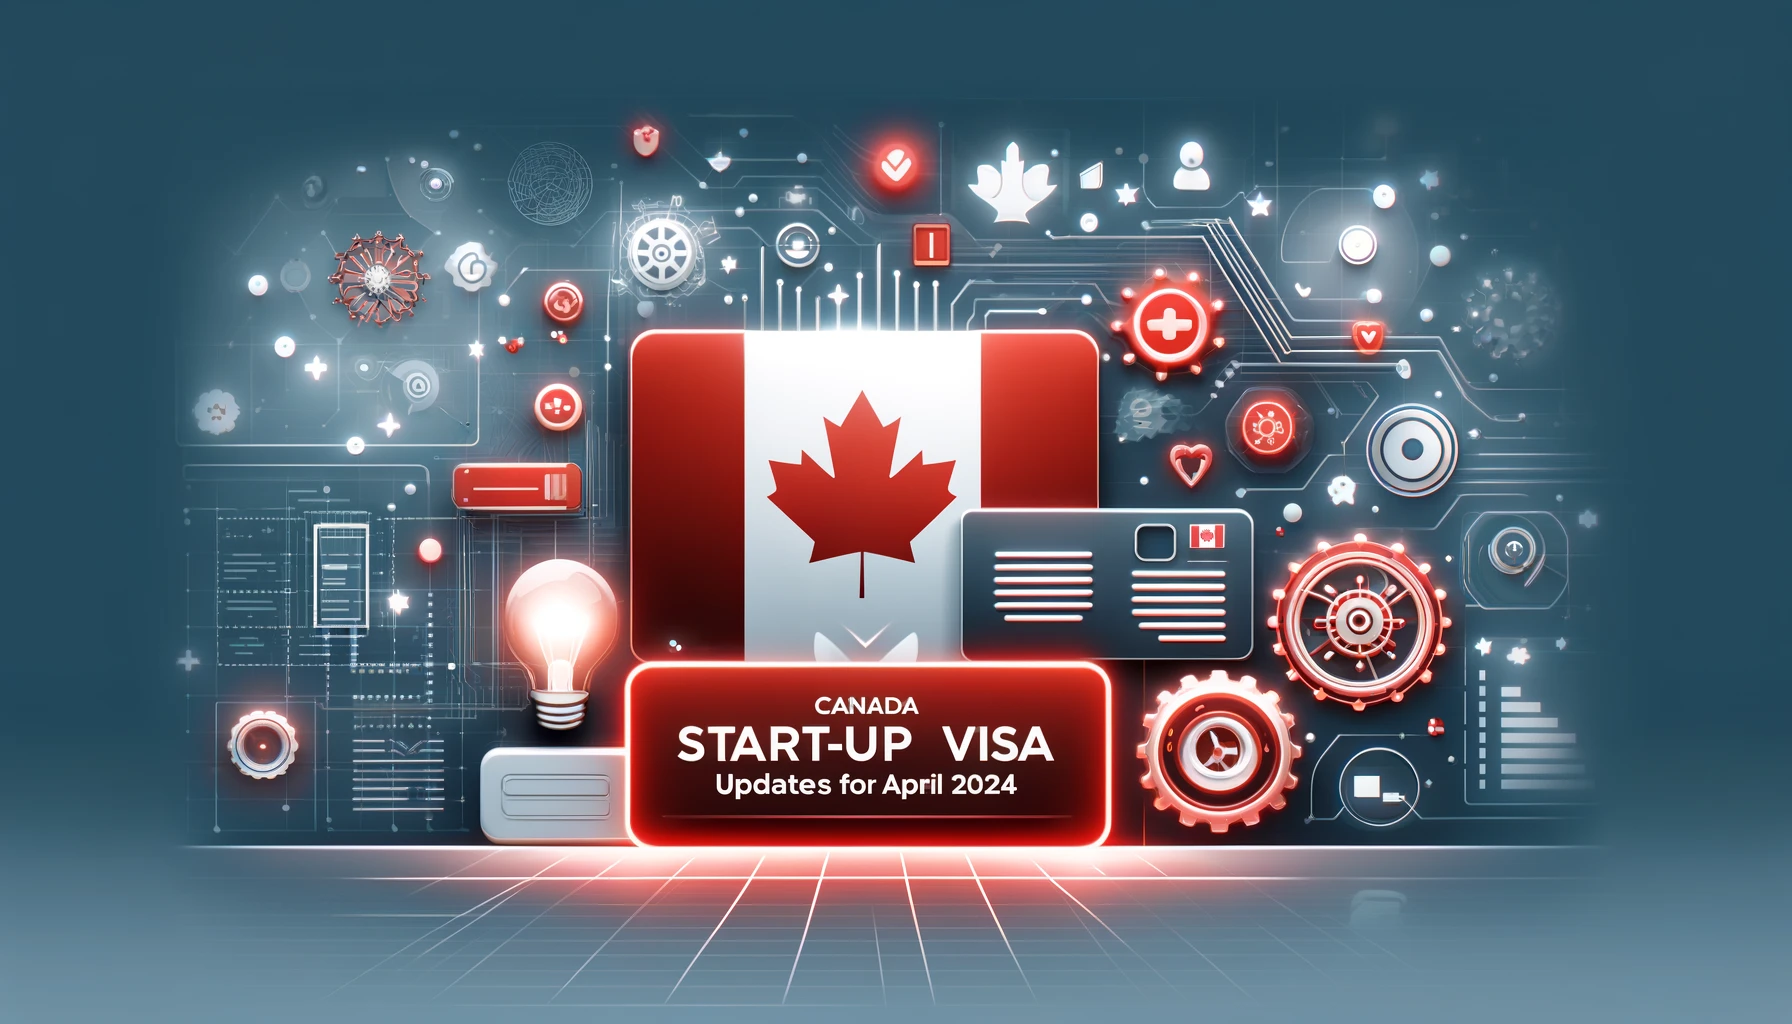 Canada Start-up Visa Program Updates: April 2024 | Government's Commitment to Program's Integrity